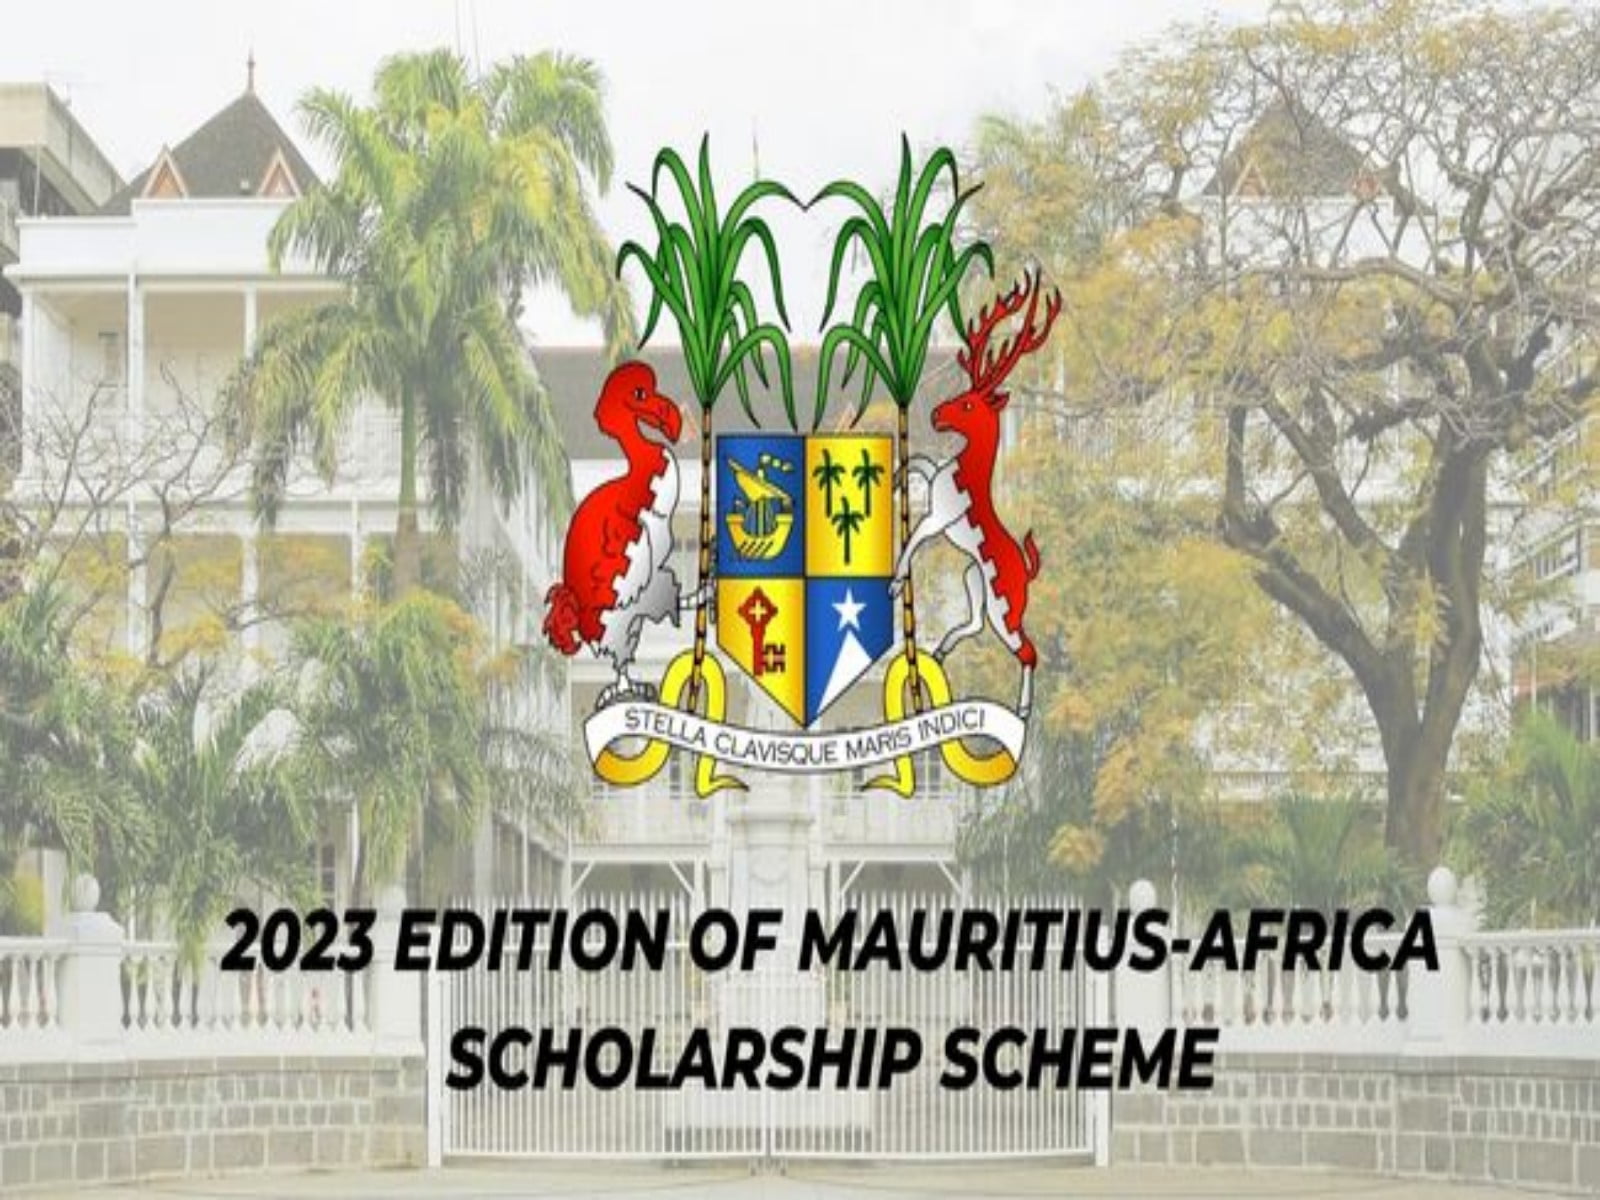 Mauritius Africa Scholarship Scheme 2023 for Study in Mauritius